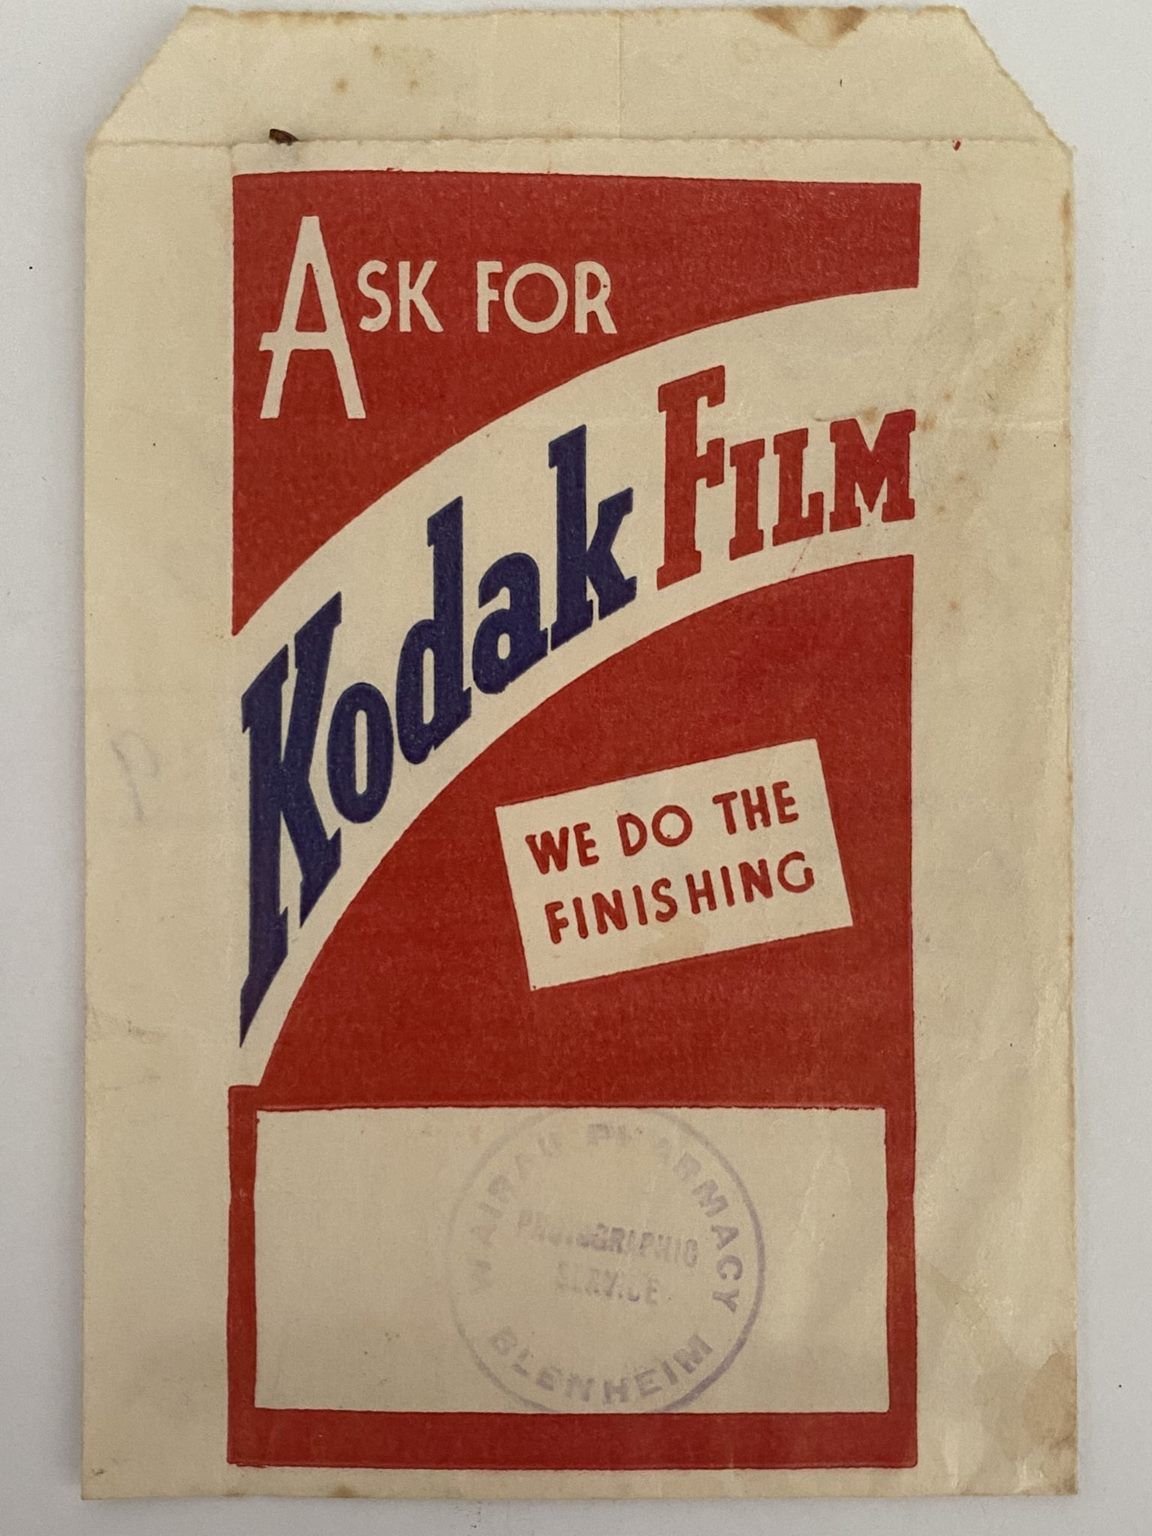 OLD PHOTO / NEGATIVE WALLET: Kodak Film 1940s